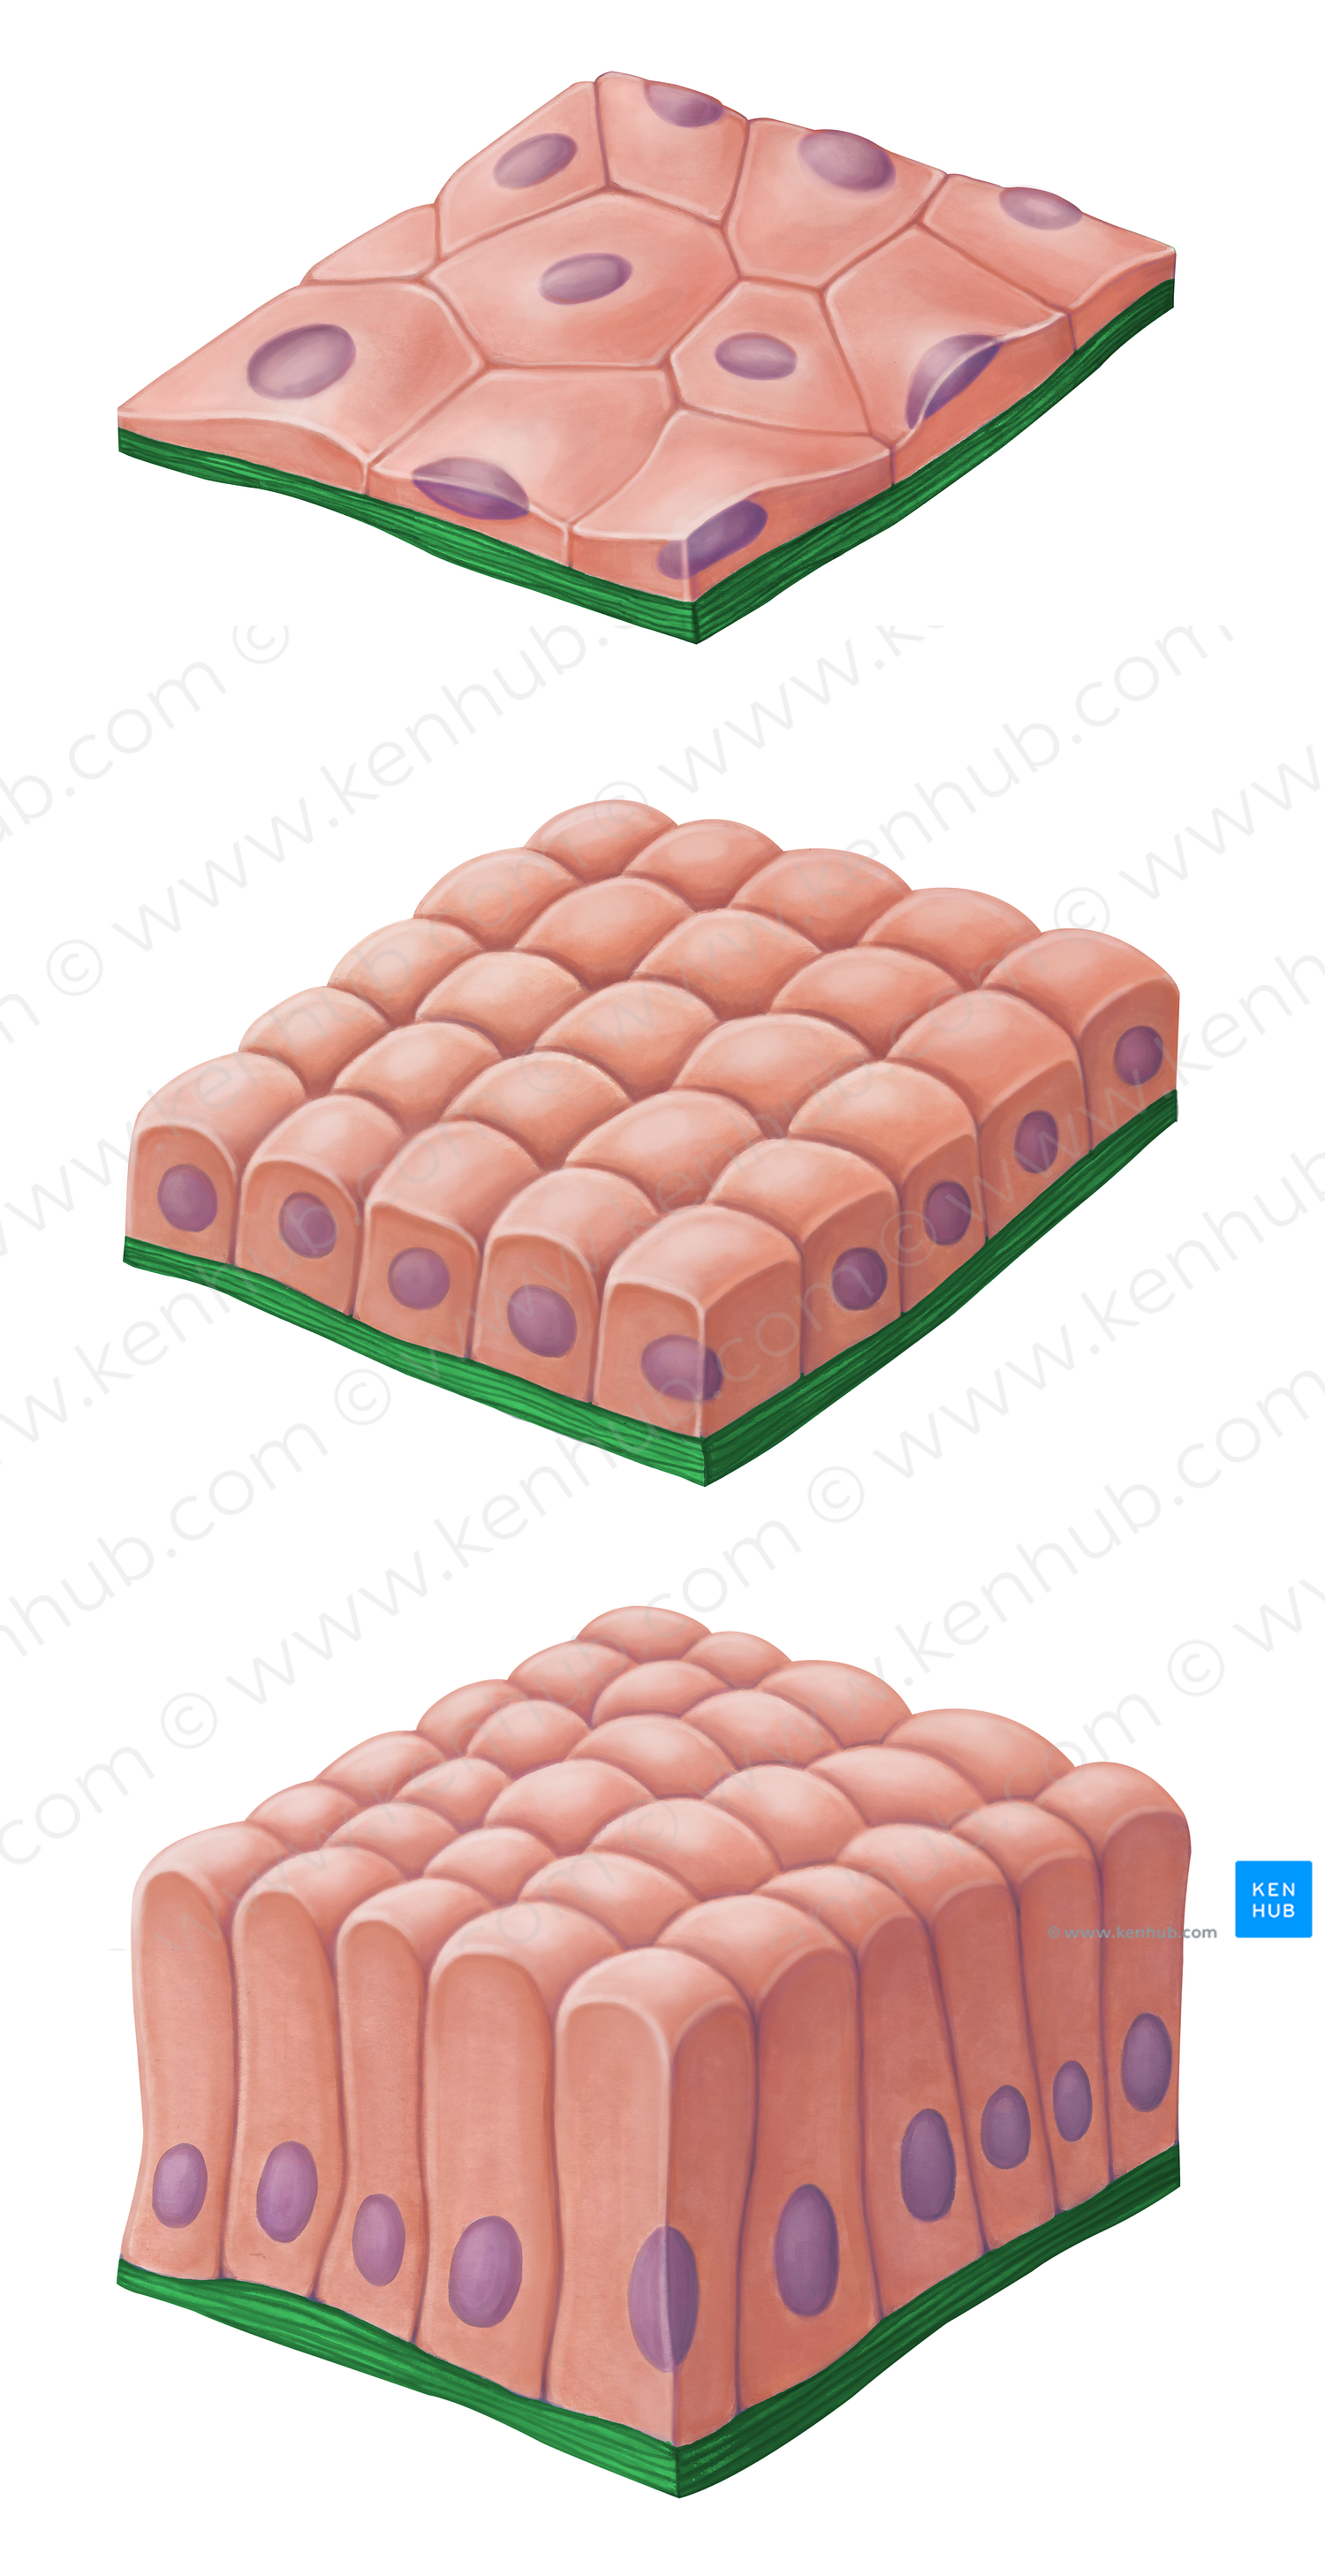 Basement membrane (#14582)